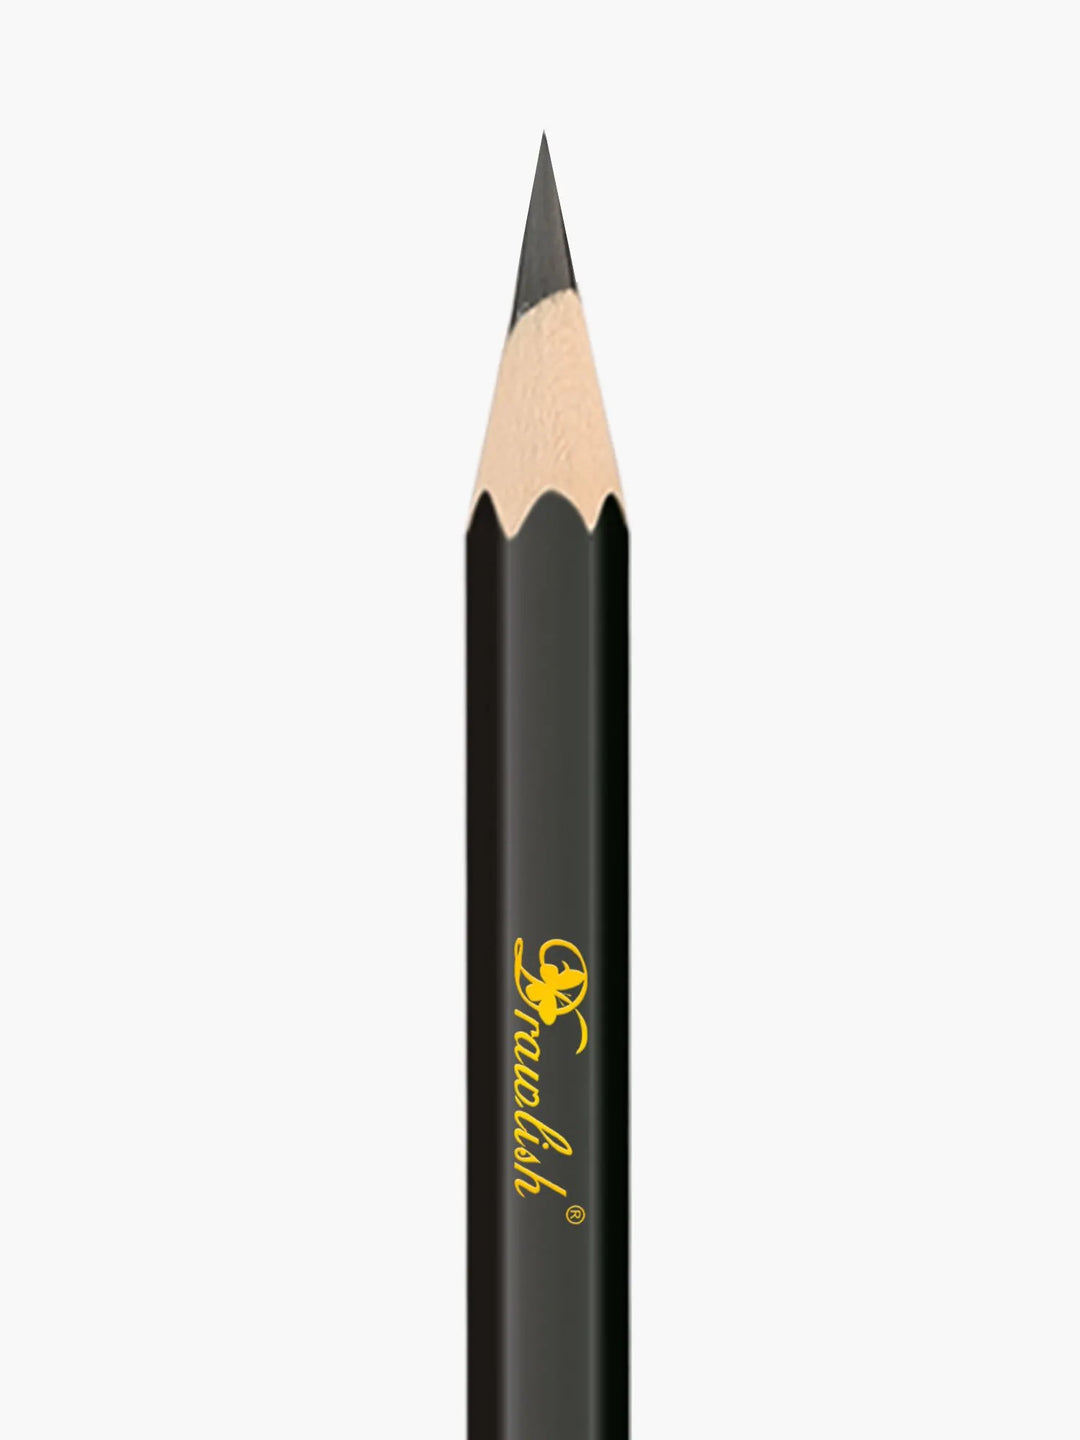 Drawlish Drawing Pencils Collection Image